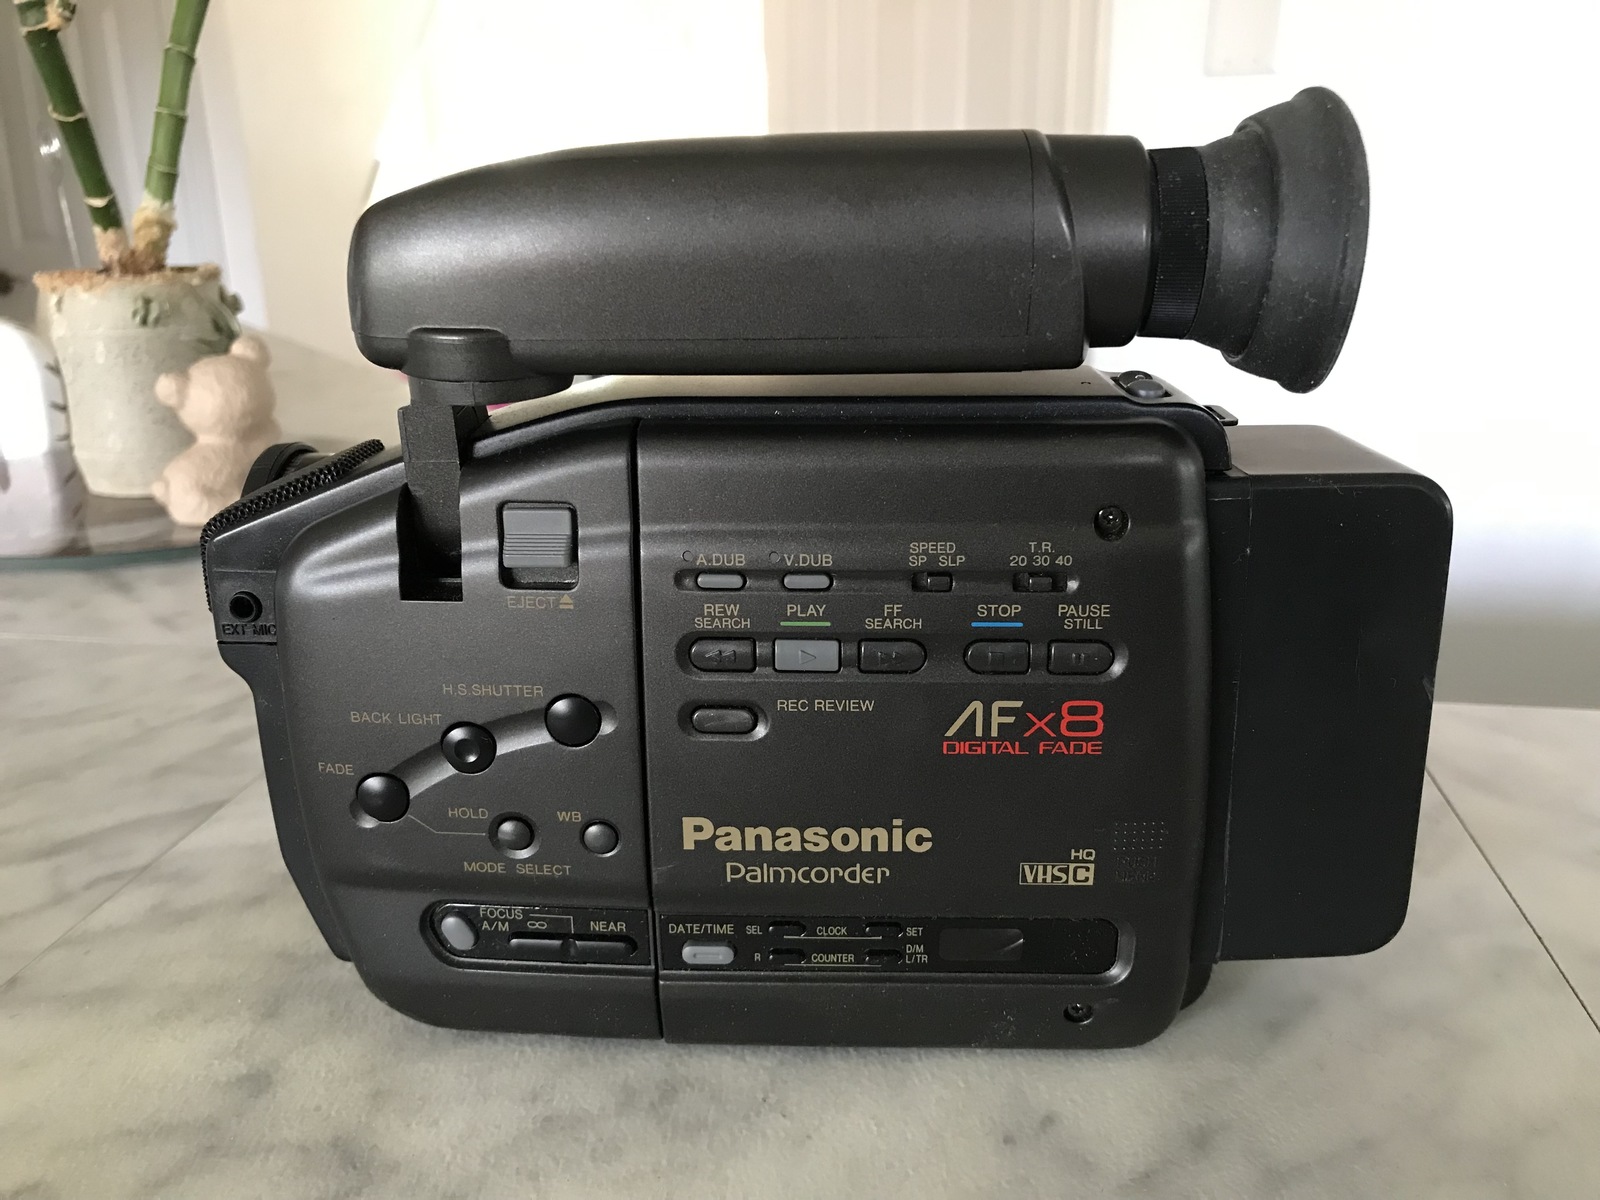 Panasonic Palmcorder AFx8 Digital Fade HQ VHSC PV-21D (Japan) 1991 - $39.99